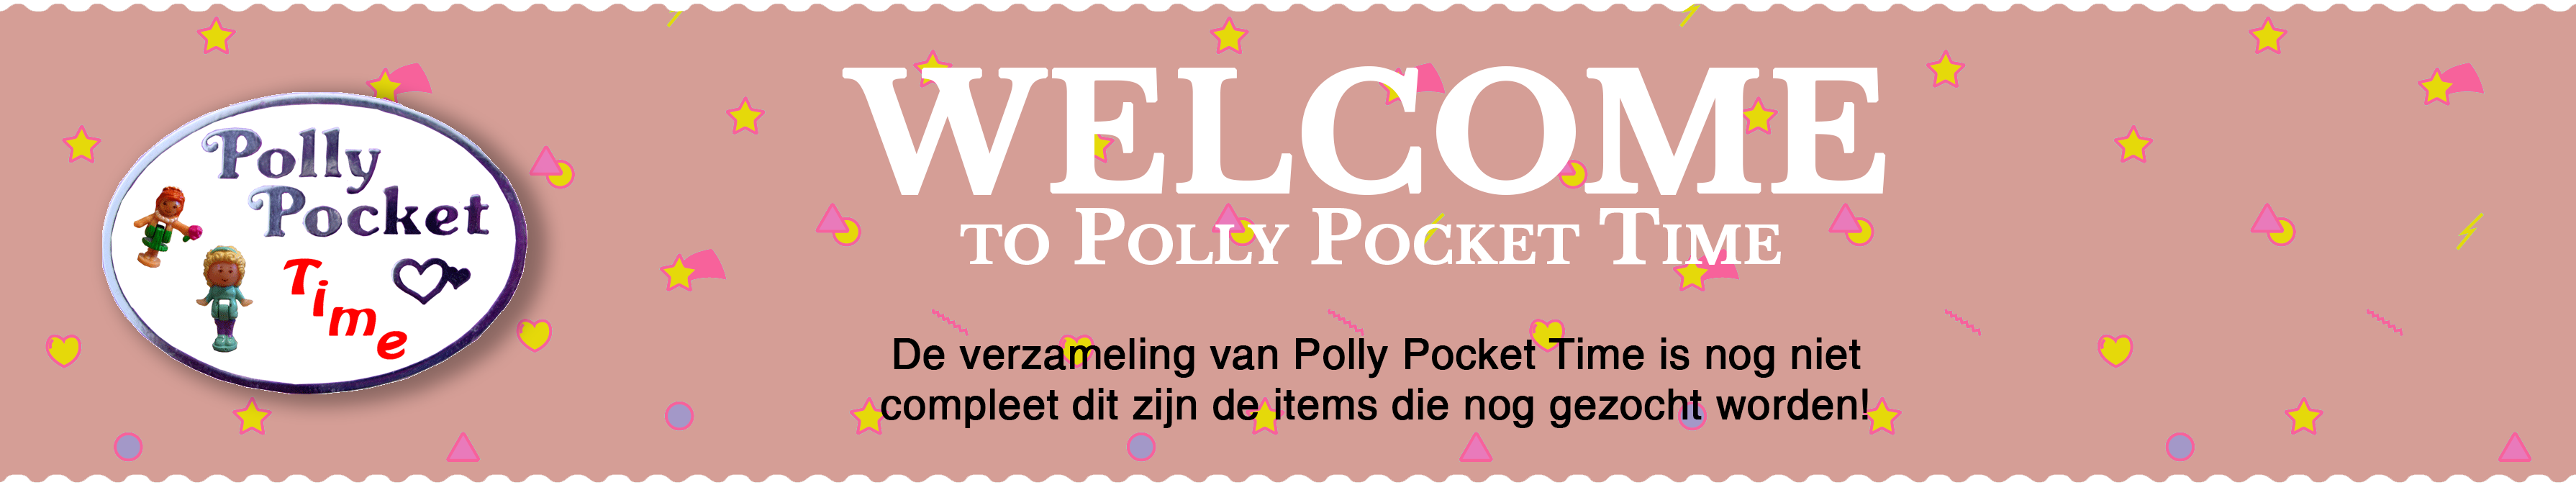 Polly Pocket Time